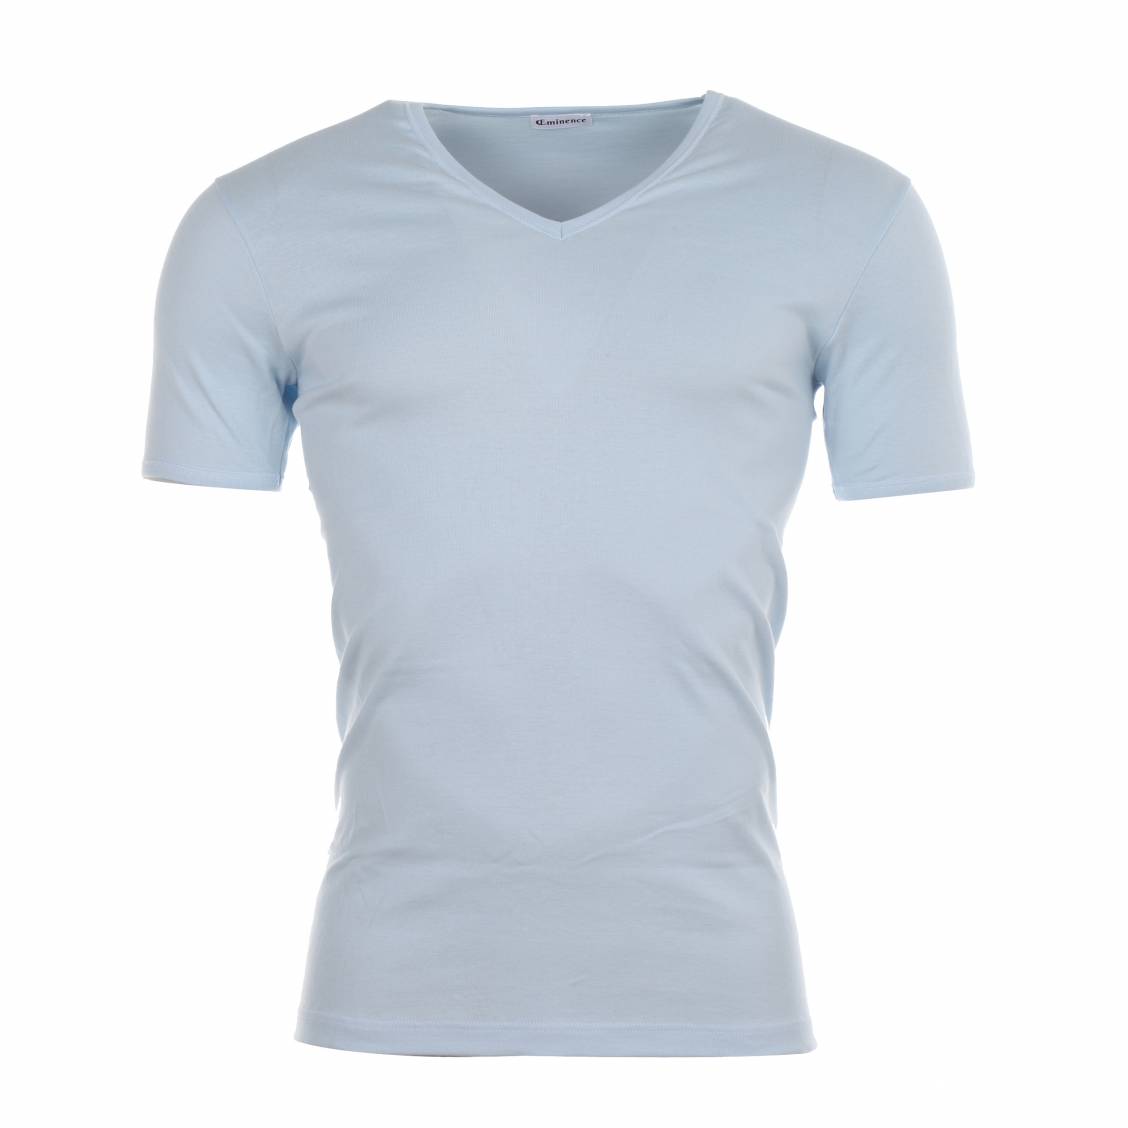  tee-shirt hypoallergénique bleu ciel 